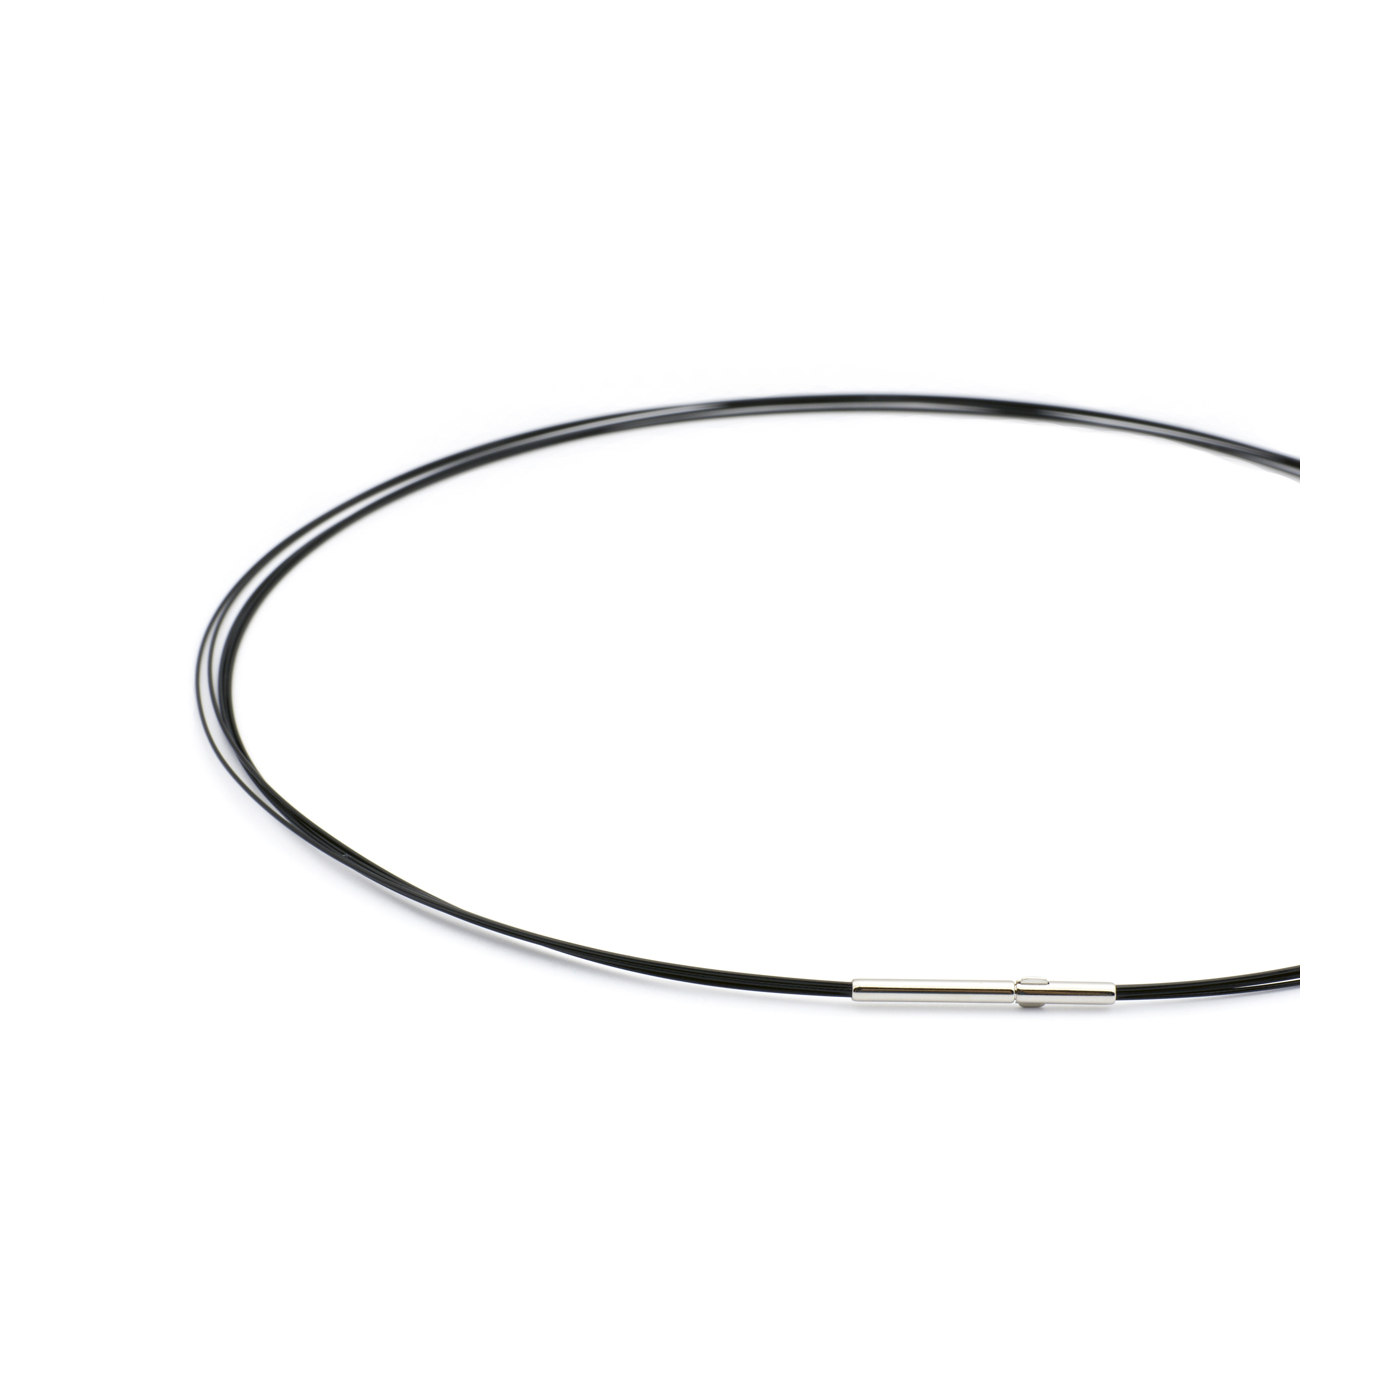 Seilcollier "Colour Cable", ES, schwarz, 5-reihig, 45 cm - 1 Stück